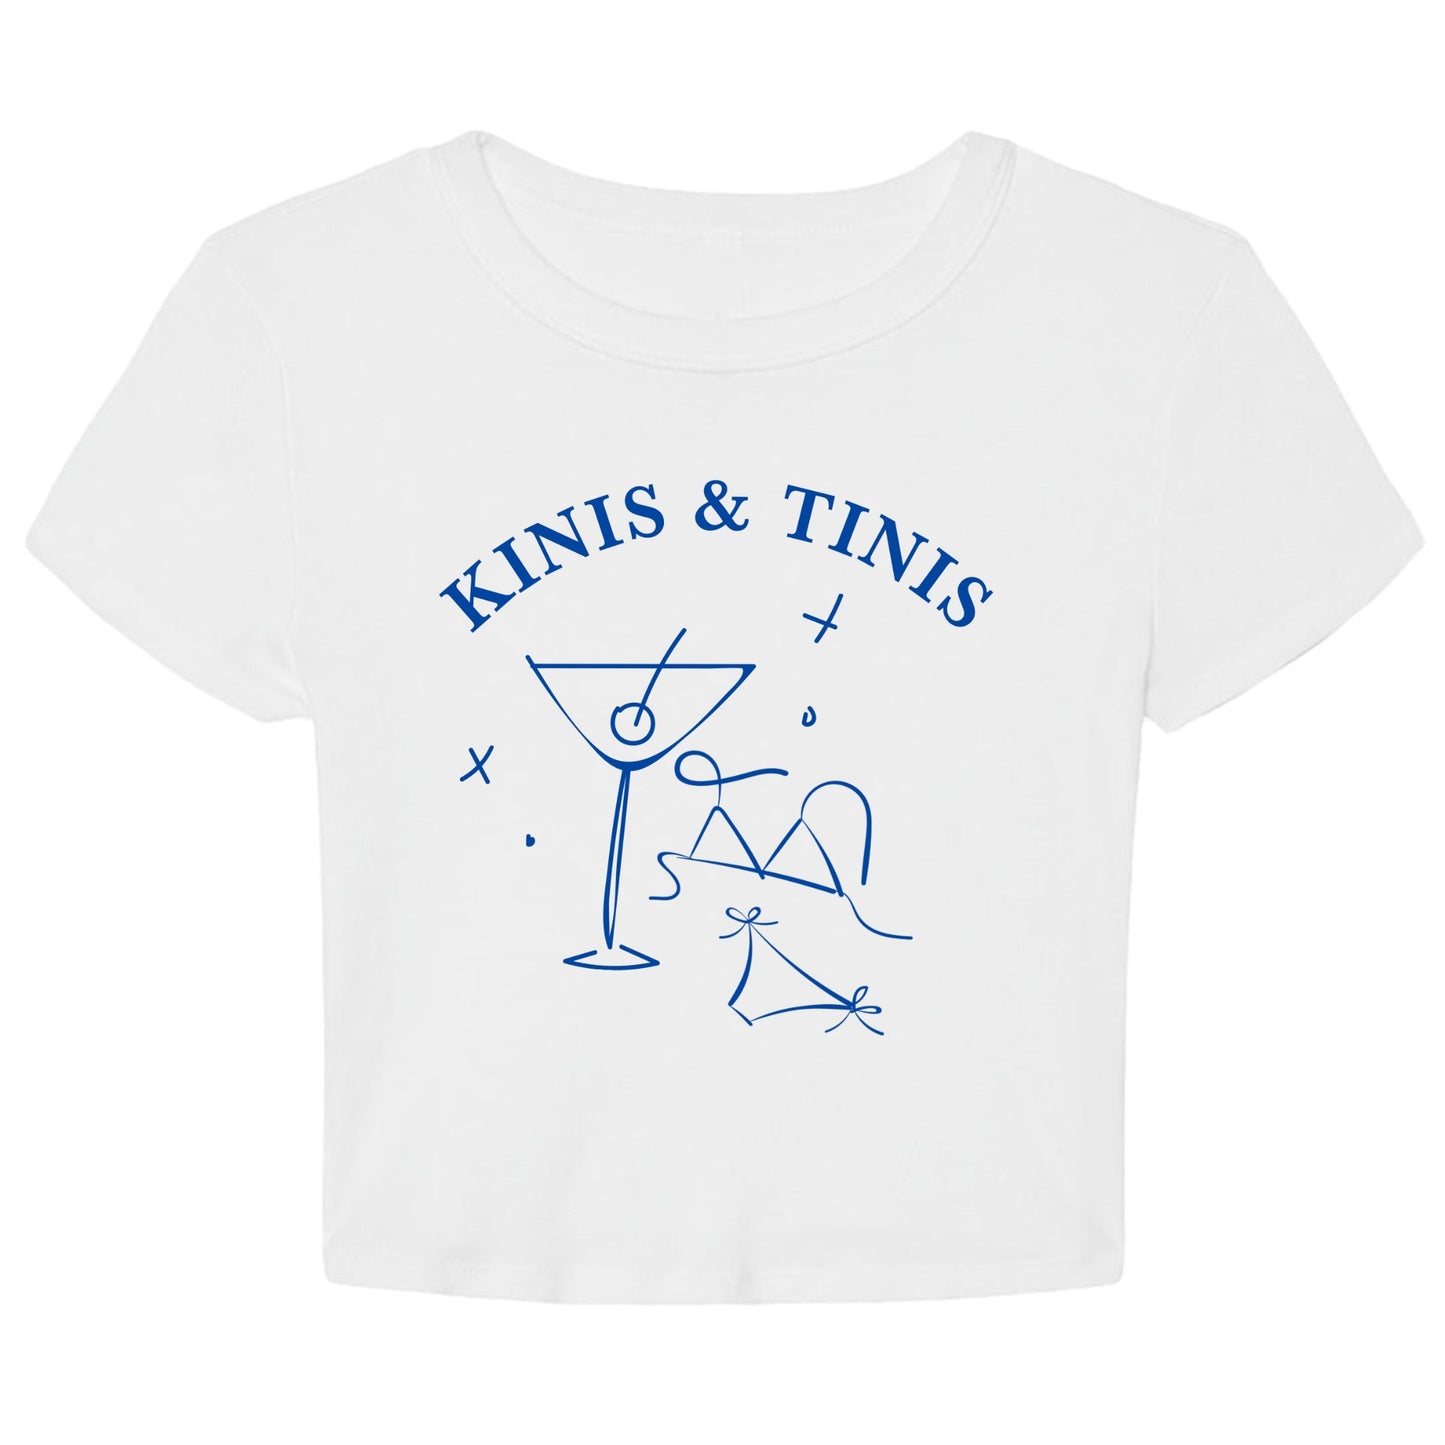 Kinis & Tinis Baby Tee